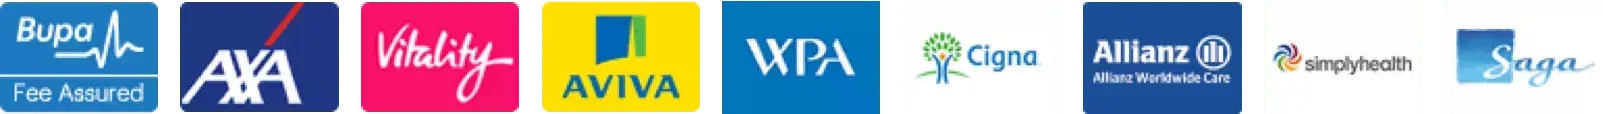 BUPA AXA Vitality AVIVA WPA Cigna Allianz Simply Health Saga health insurance provider